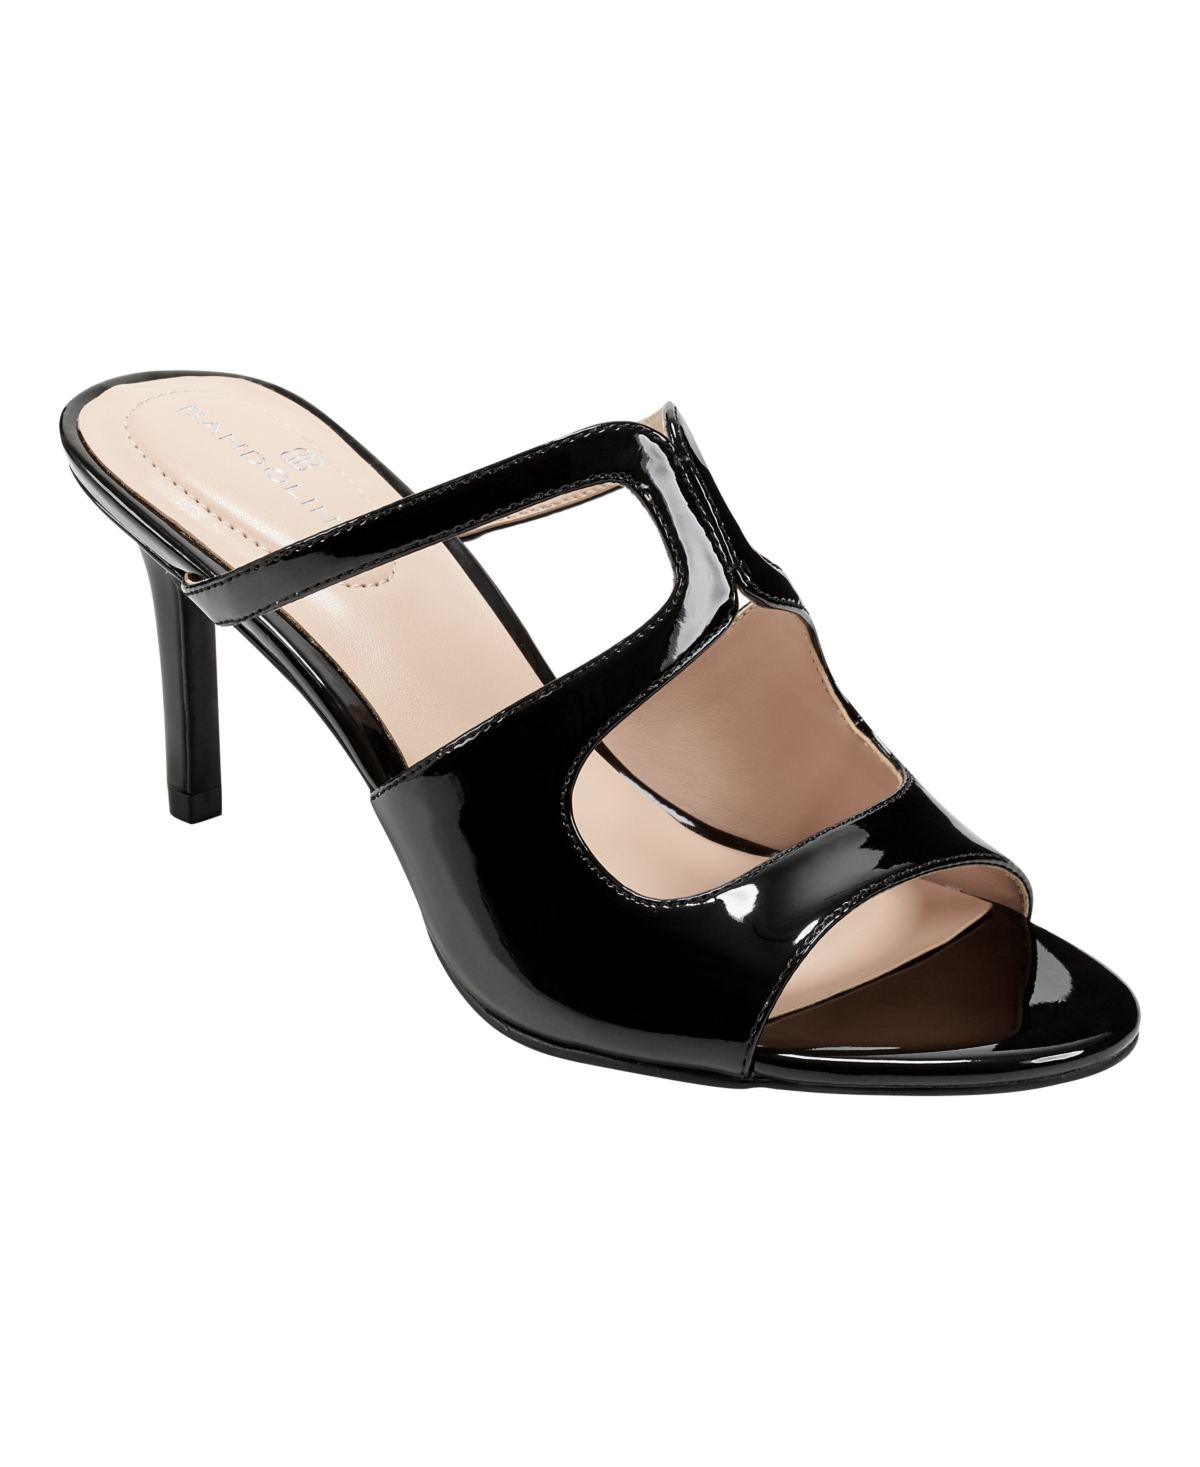 Bandolino Women's Mizelle Open Toe Slip-On Dress Sandals Women's Shoes